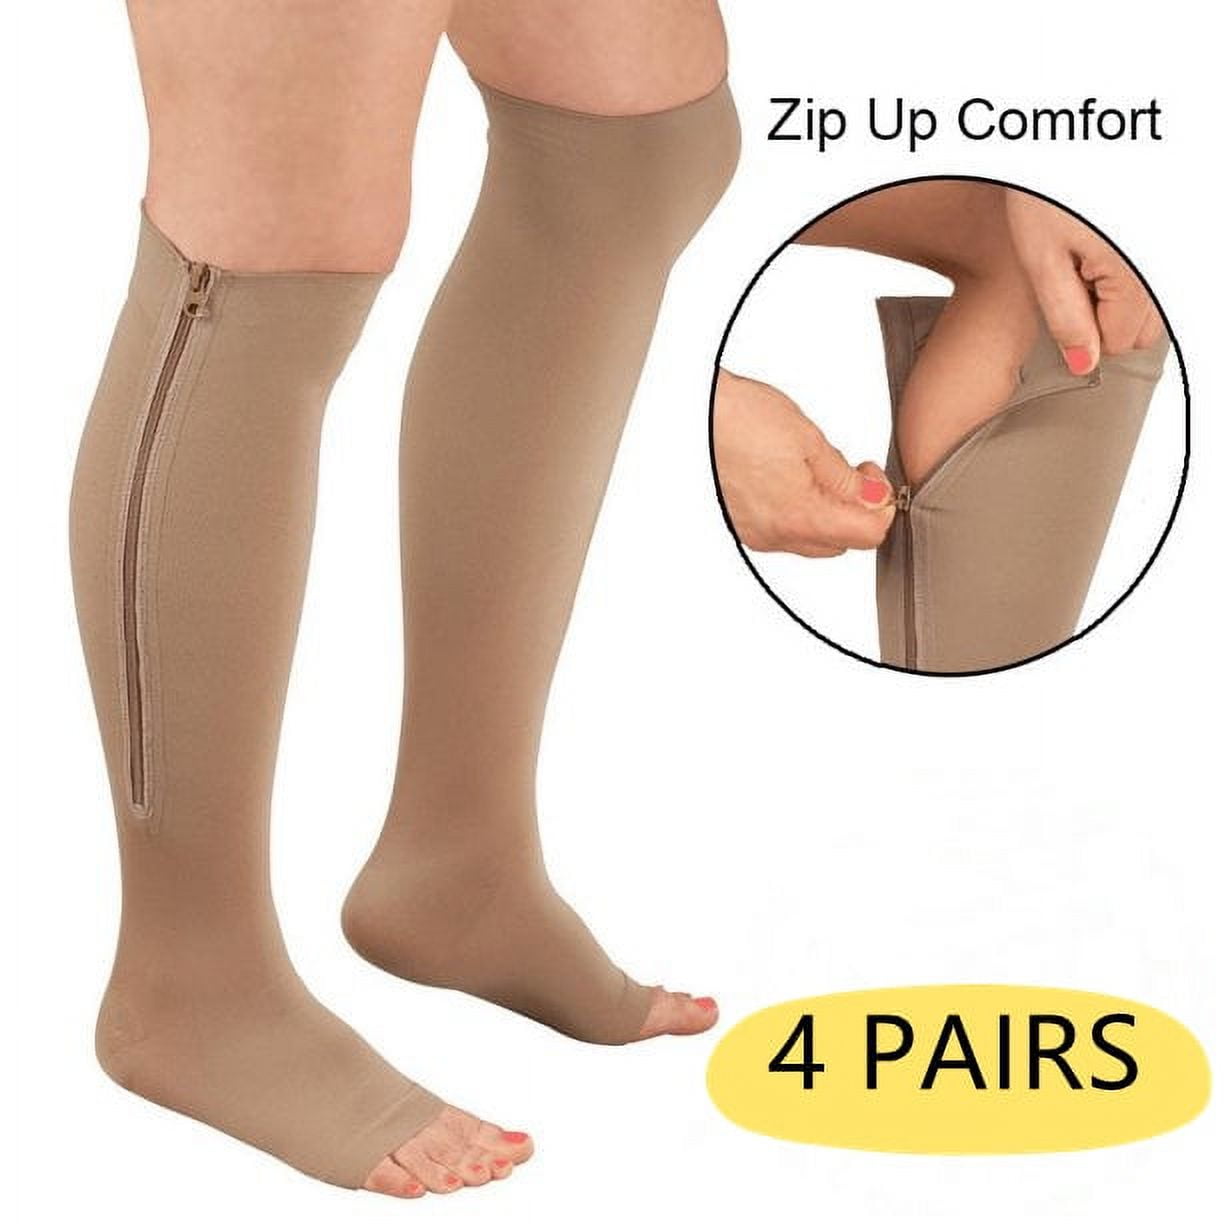 Zipper Pressure Compression Socks Support Stockings Leg - Open Toe Knee  High - 20-30mmHg - Helps Circulation, Varicose Veins, Swollen Legs, Zipper  - Nude 2X-Large Size (4 Pairs) 